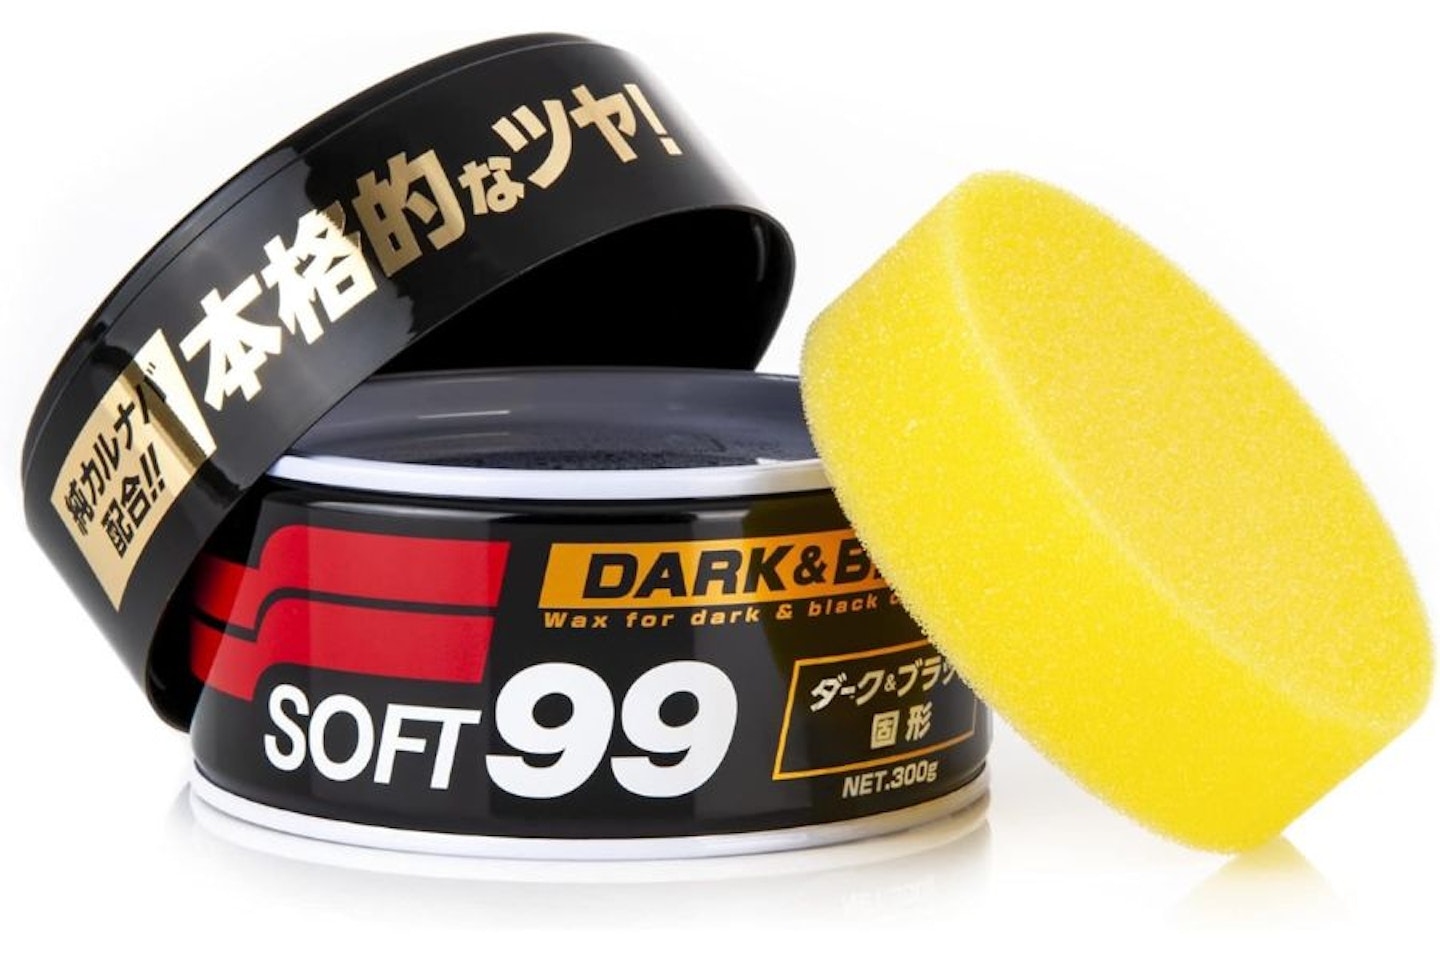 Soft99 Black and Dark Wax